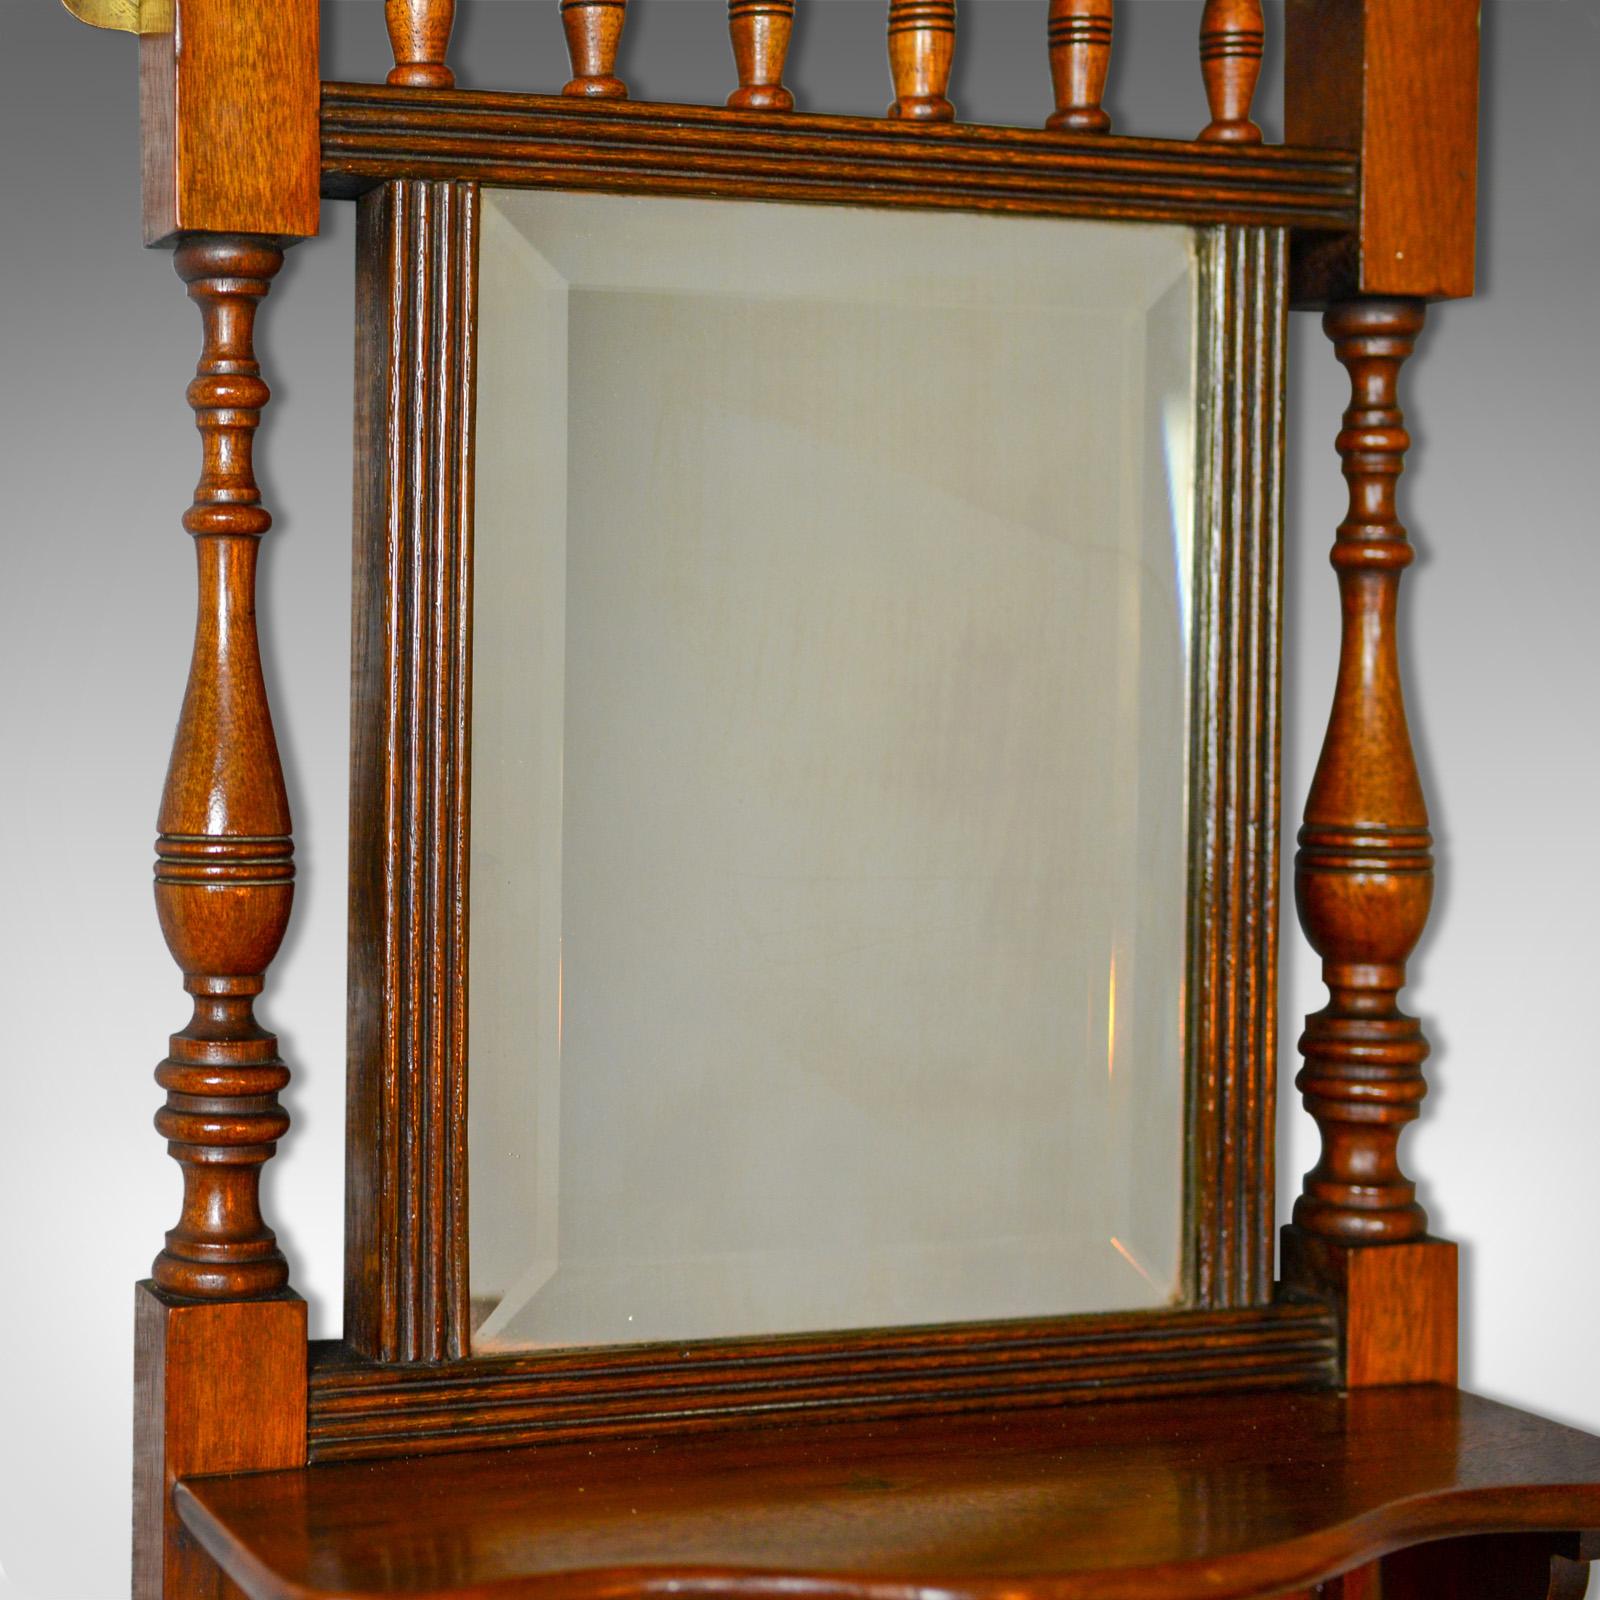 20th Century Antique Valet Mirror, English, Edwardian, Small, Walnut, Wall, circa 1910